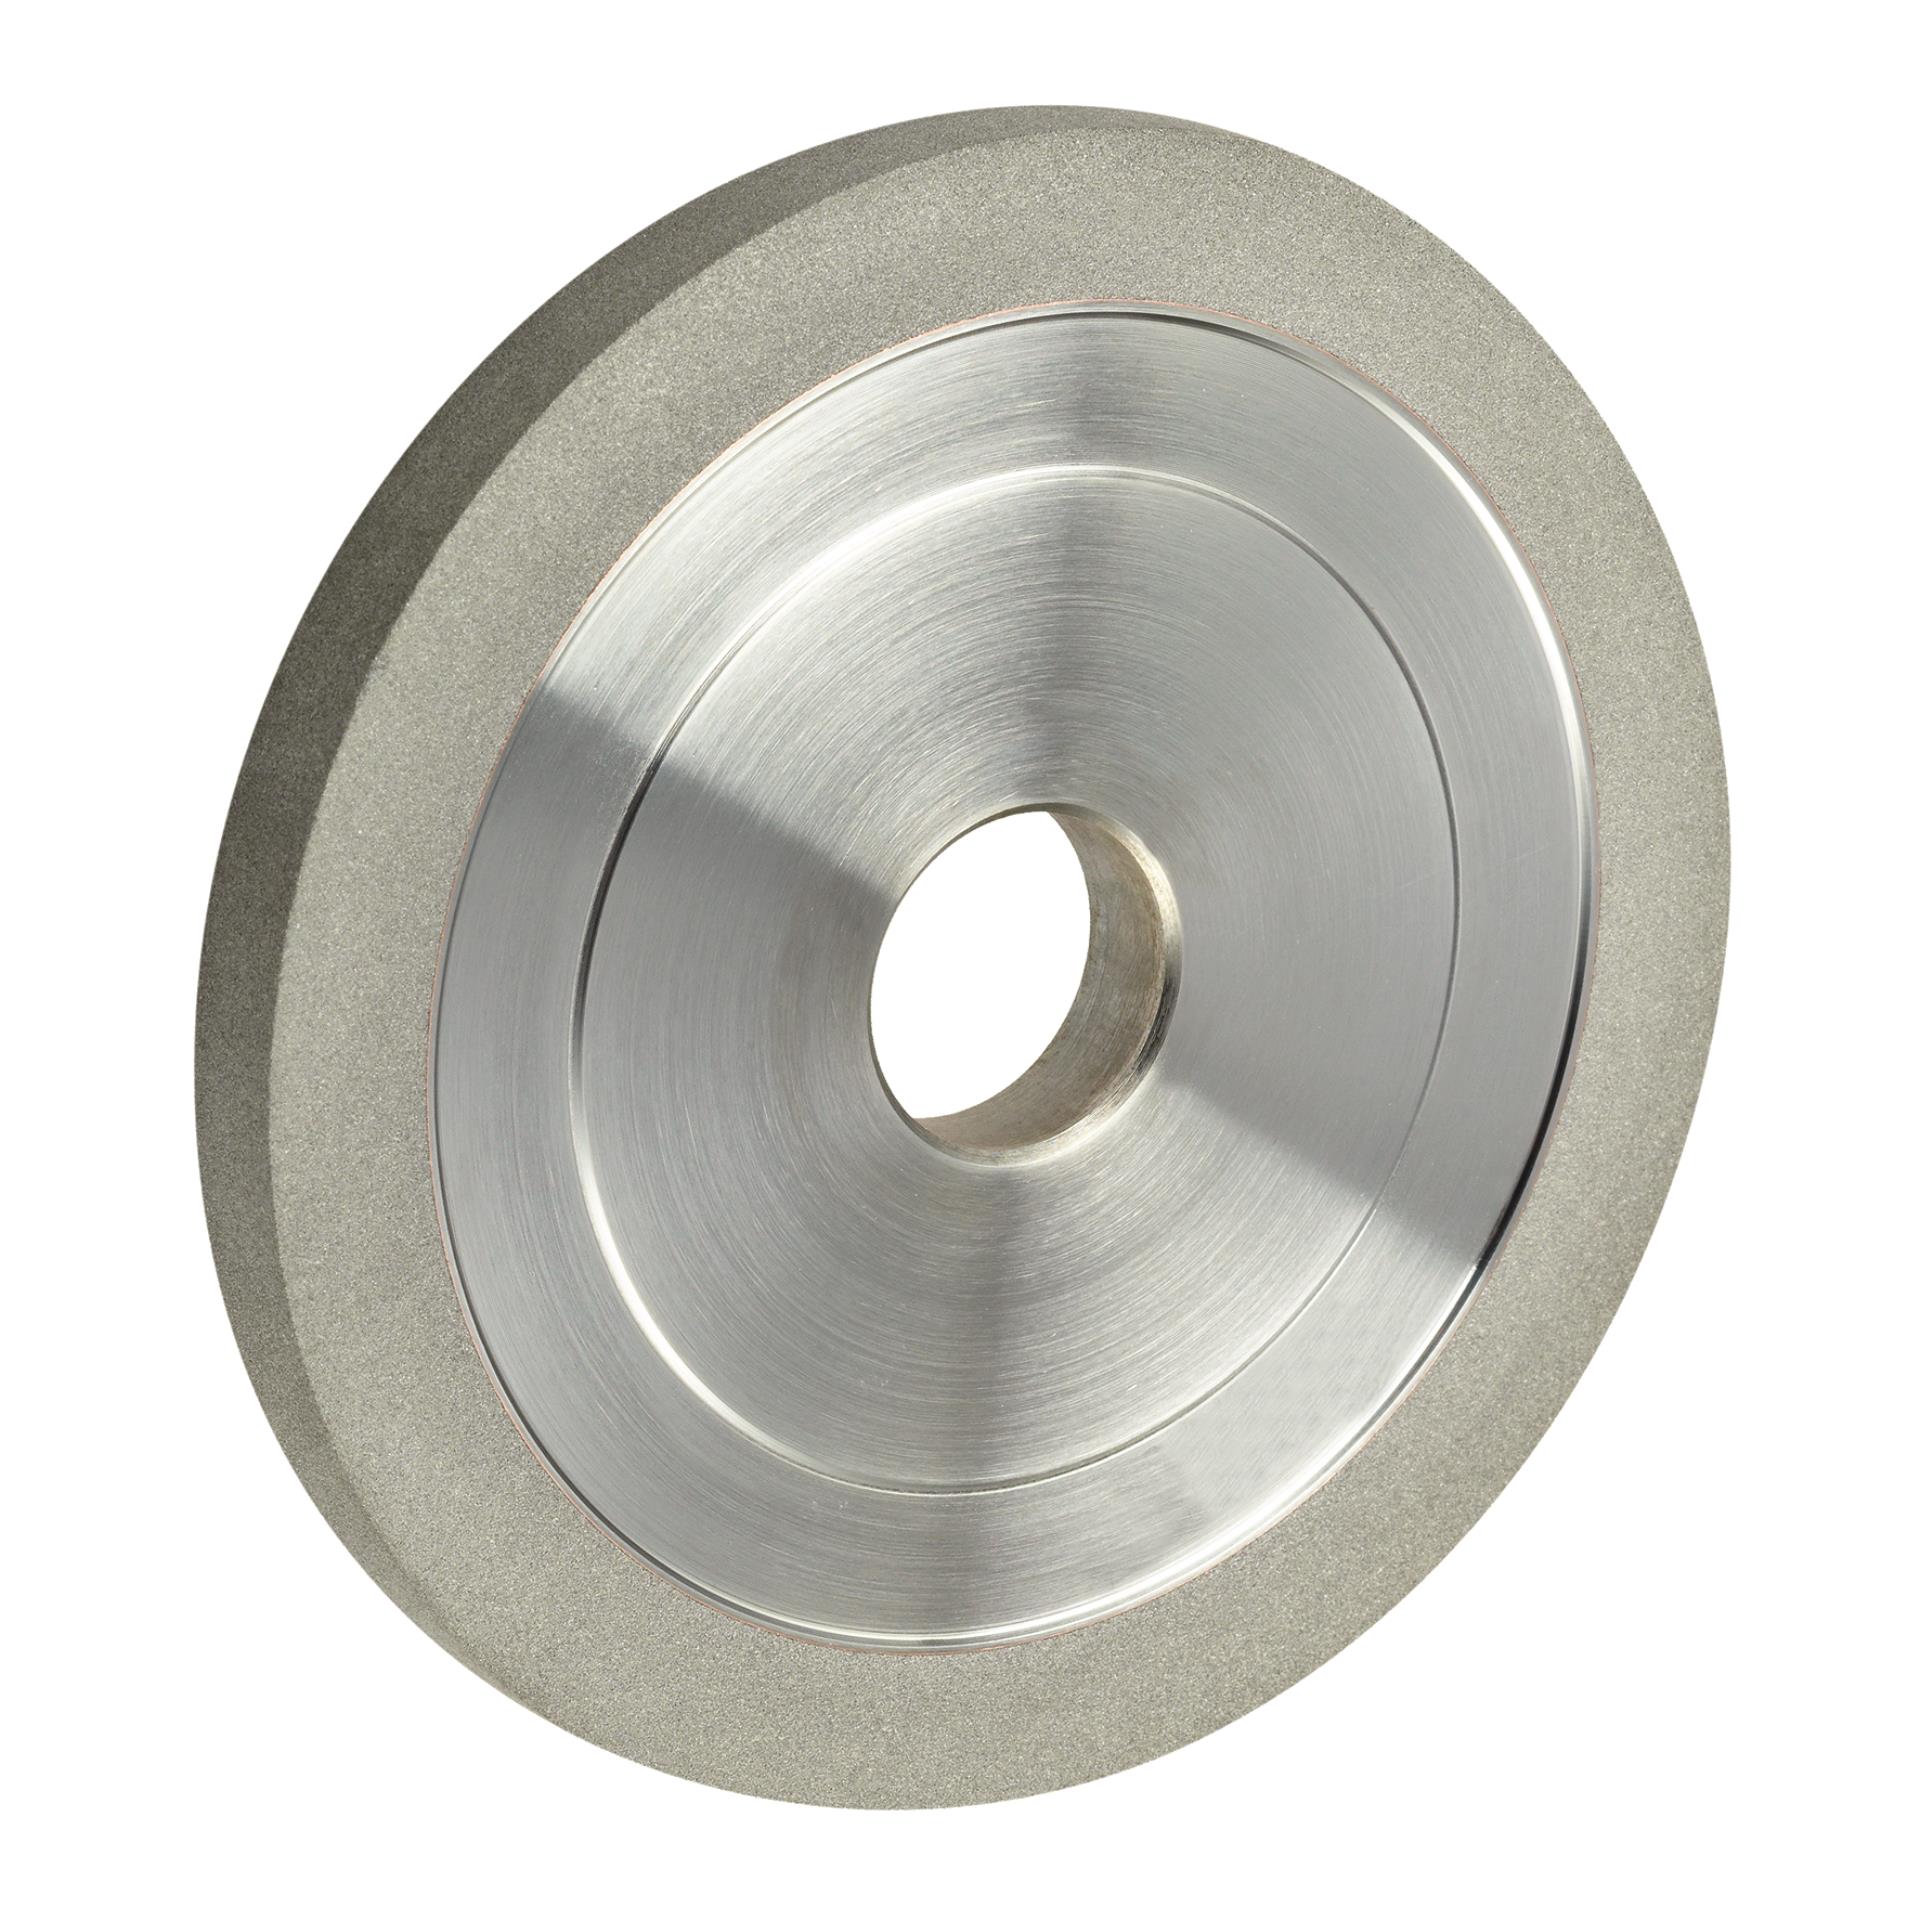 Diamond Grinding Wheel Abrasive Carbide Metal Grinder Cutter Sharpener 3-8 Inch 